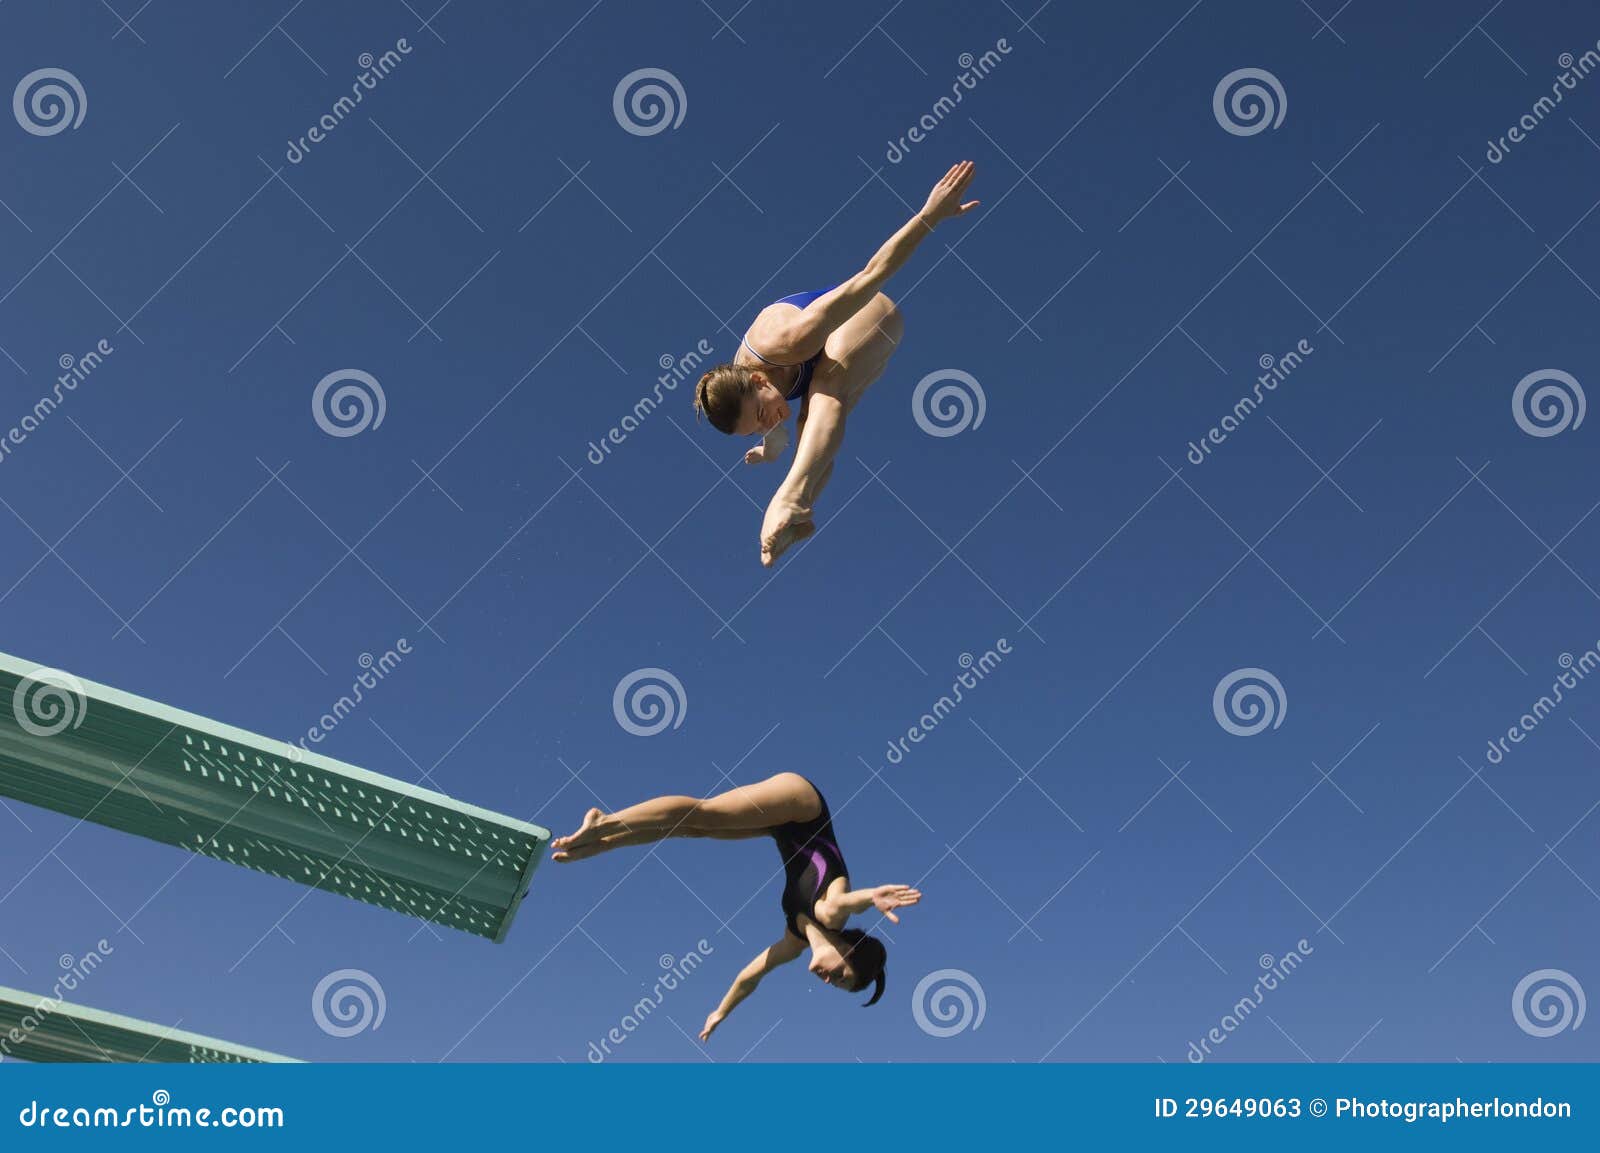 female divers diving in midair